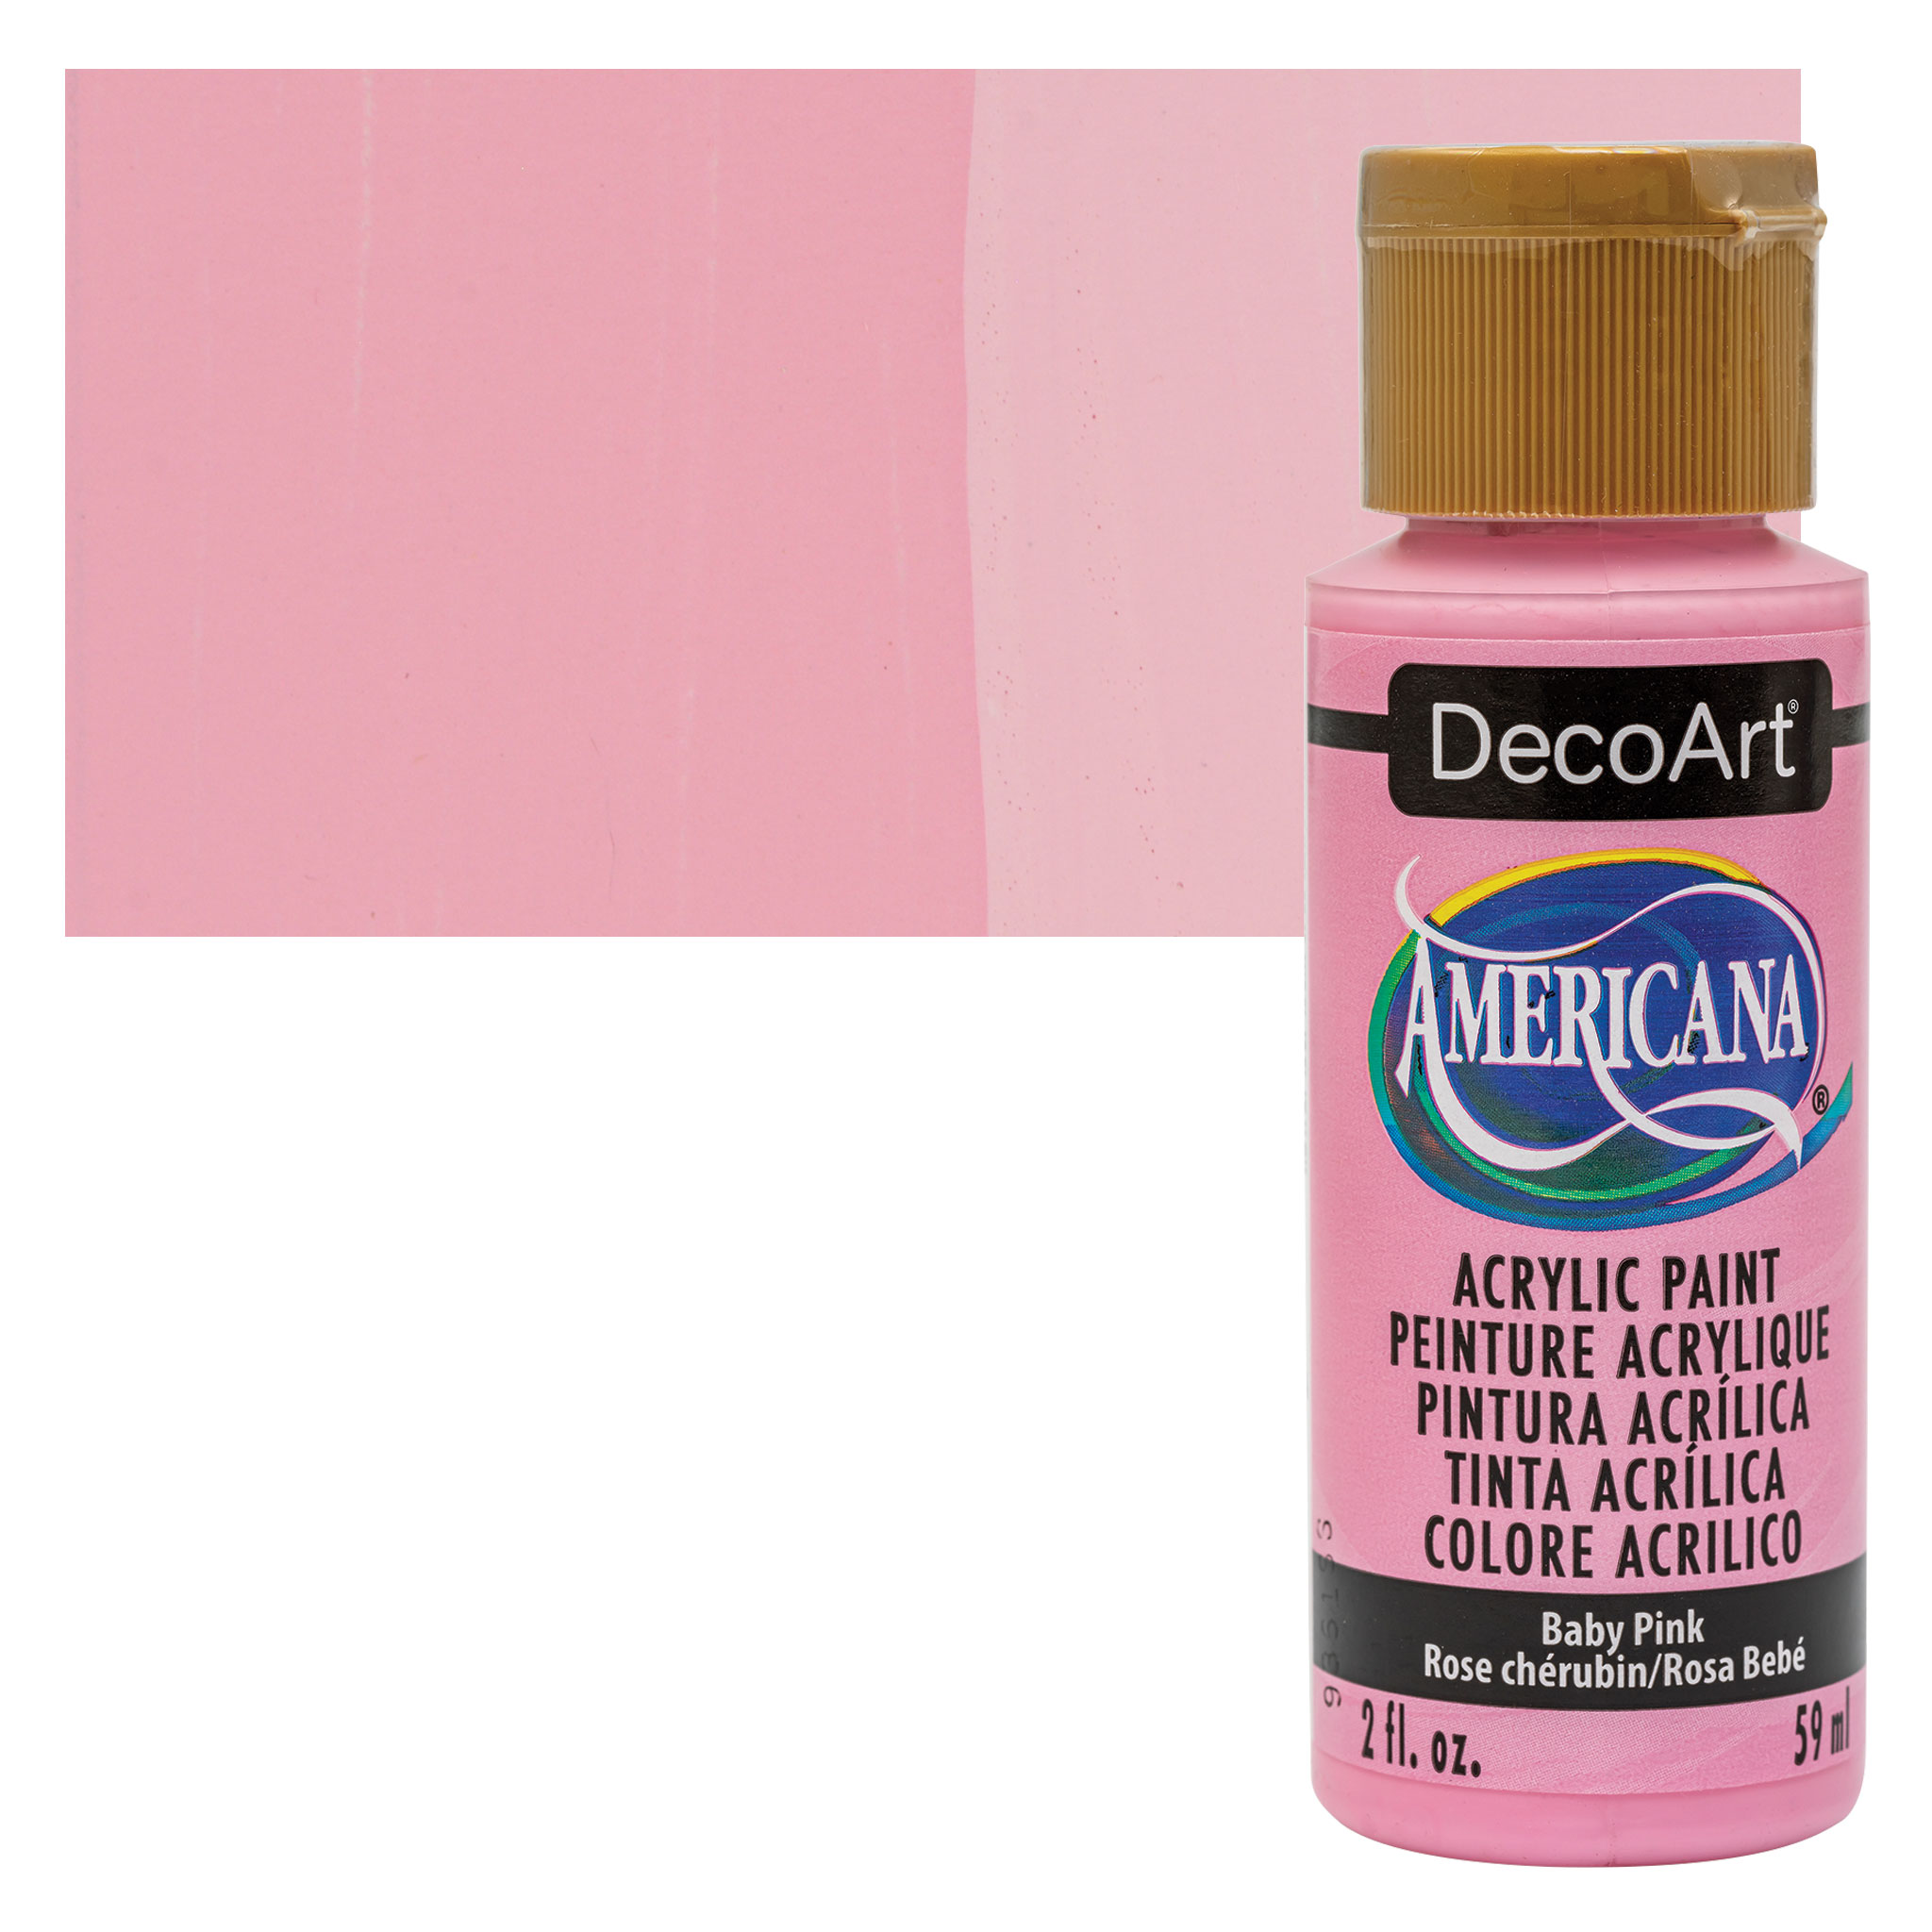 DecoArt Americana Acrylic Paint - Peacock Teal, 2 oz